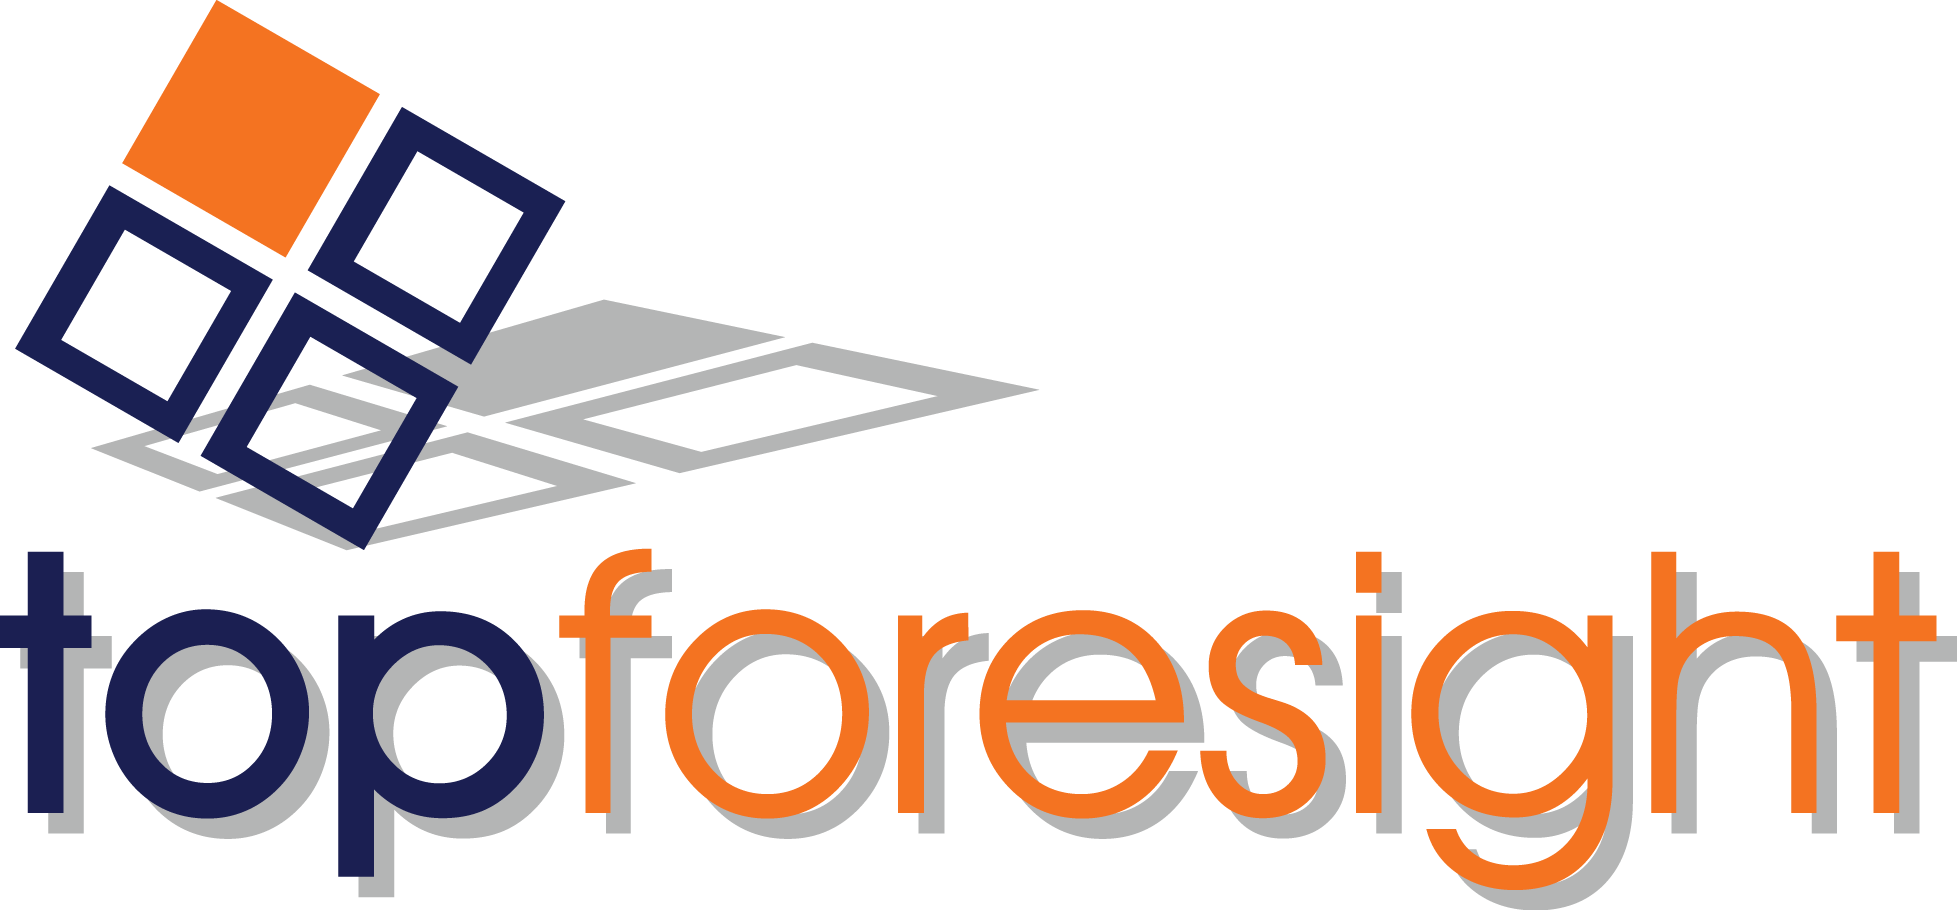 Foresight Logo - Top Foresight Logo - DisruptHR